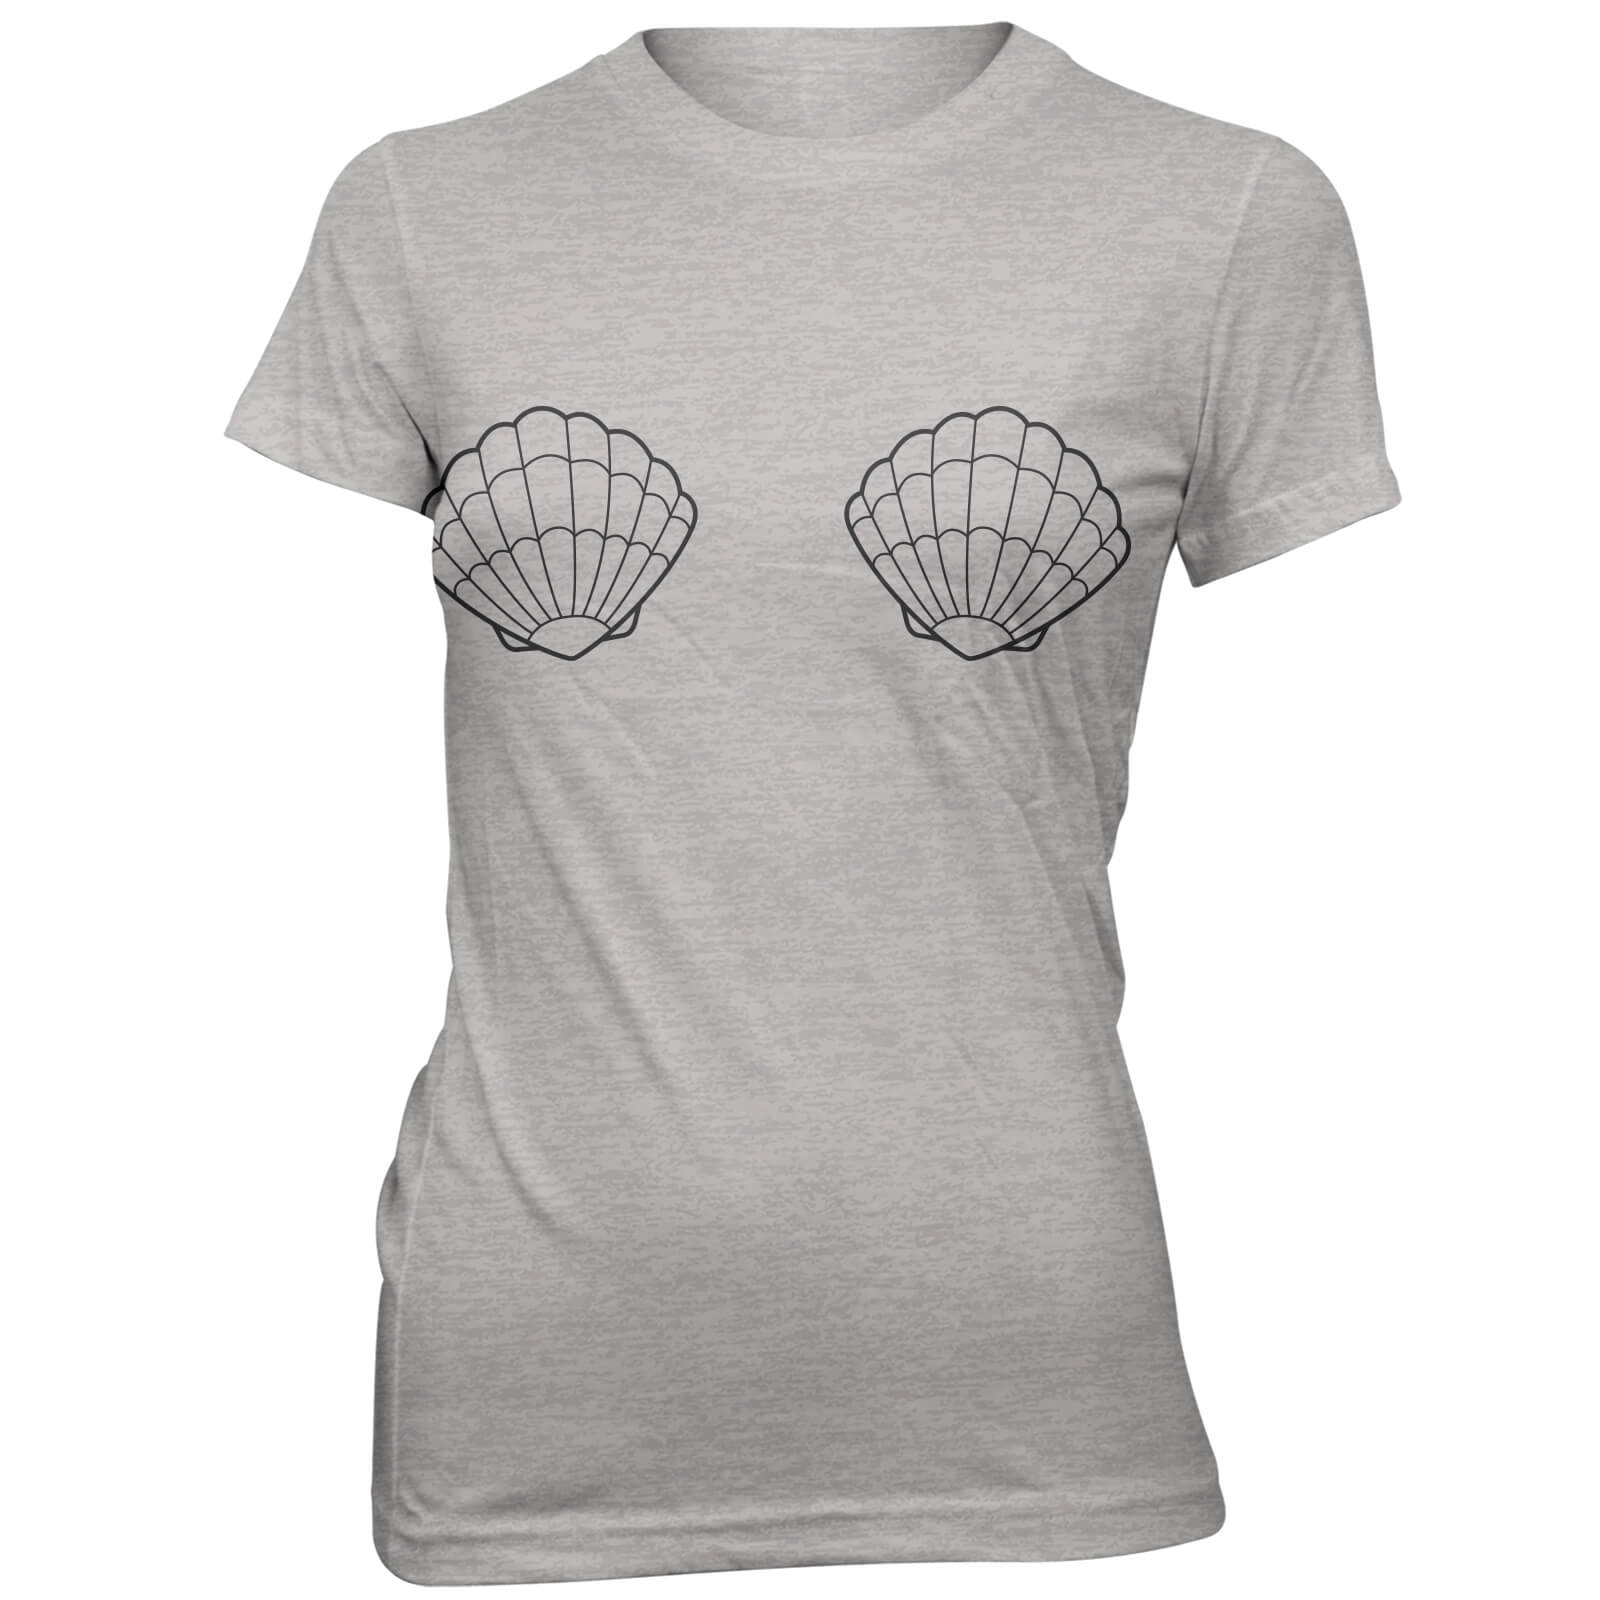 Small Shells Women's Grey T-Shirt - S